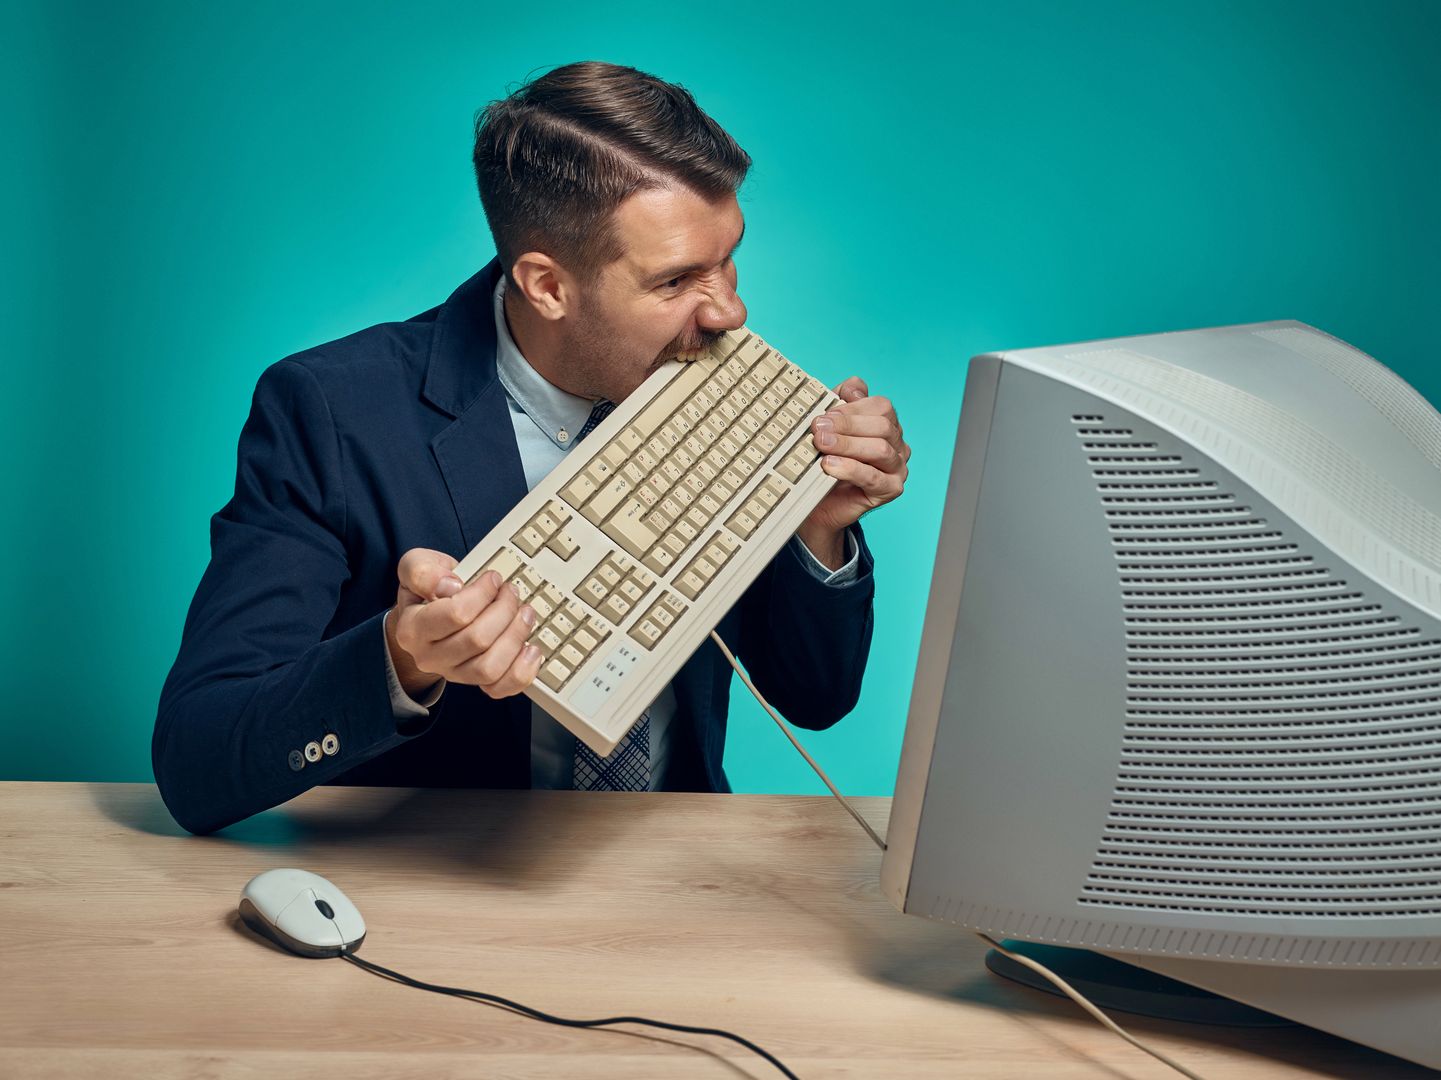 Angry fury businessman breaking keyboard against a blue studio background